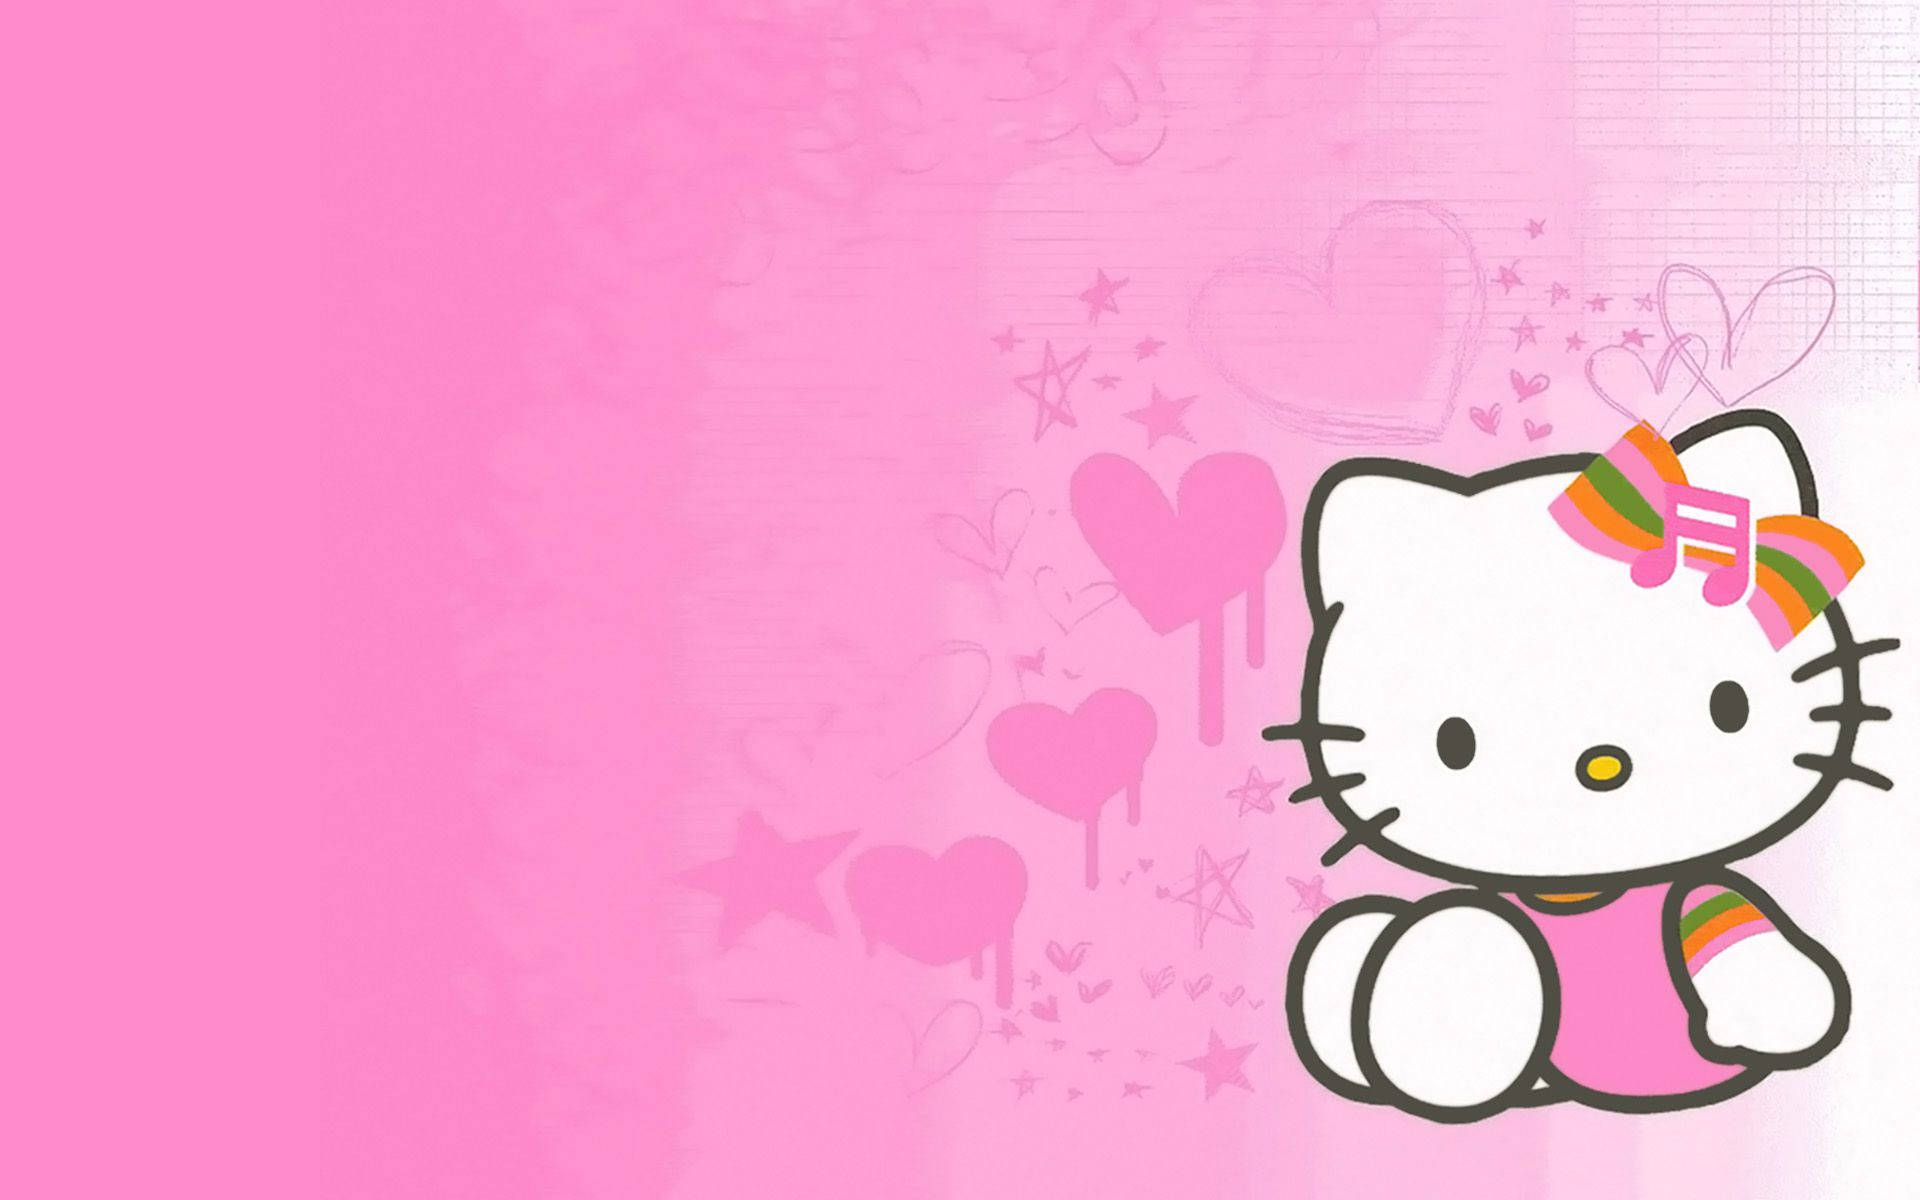 Free Hello Kitty Aesthetic Wallpaper Downloads, Hello Kitty Aesthetic Wallpaper for FREE